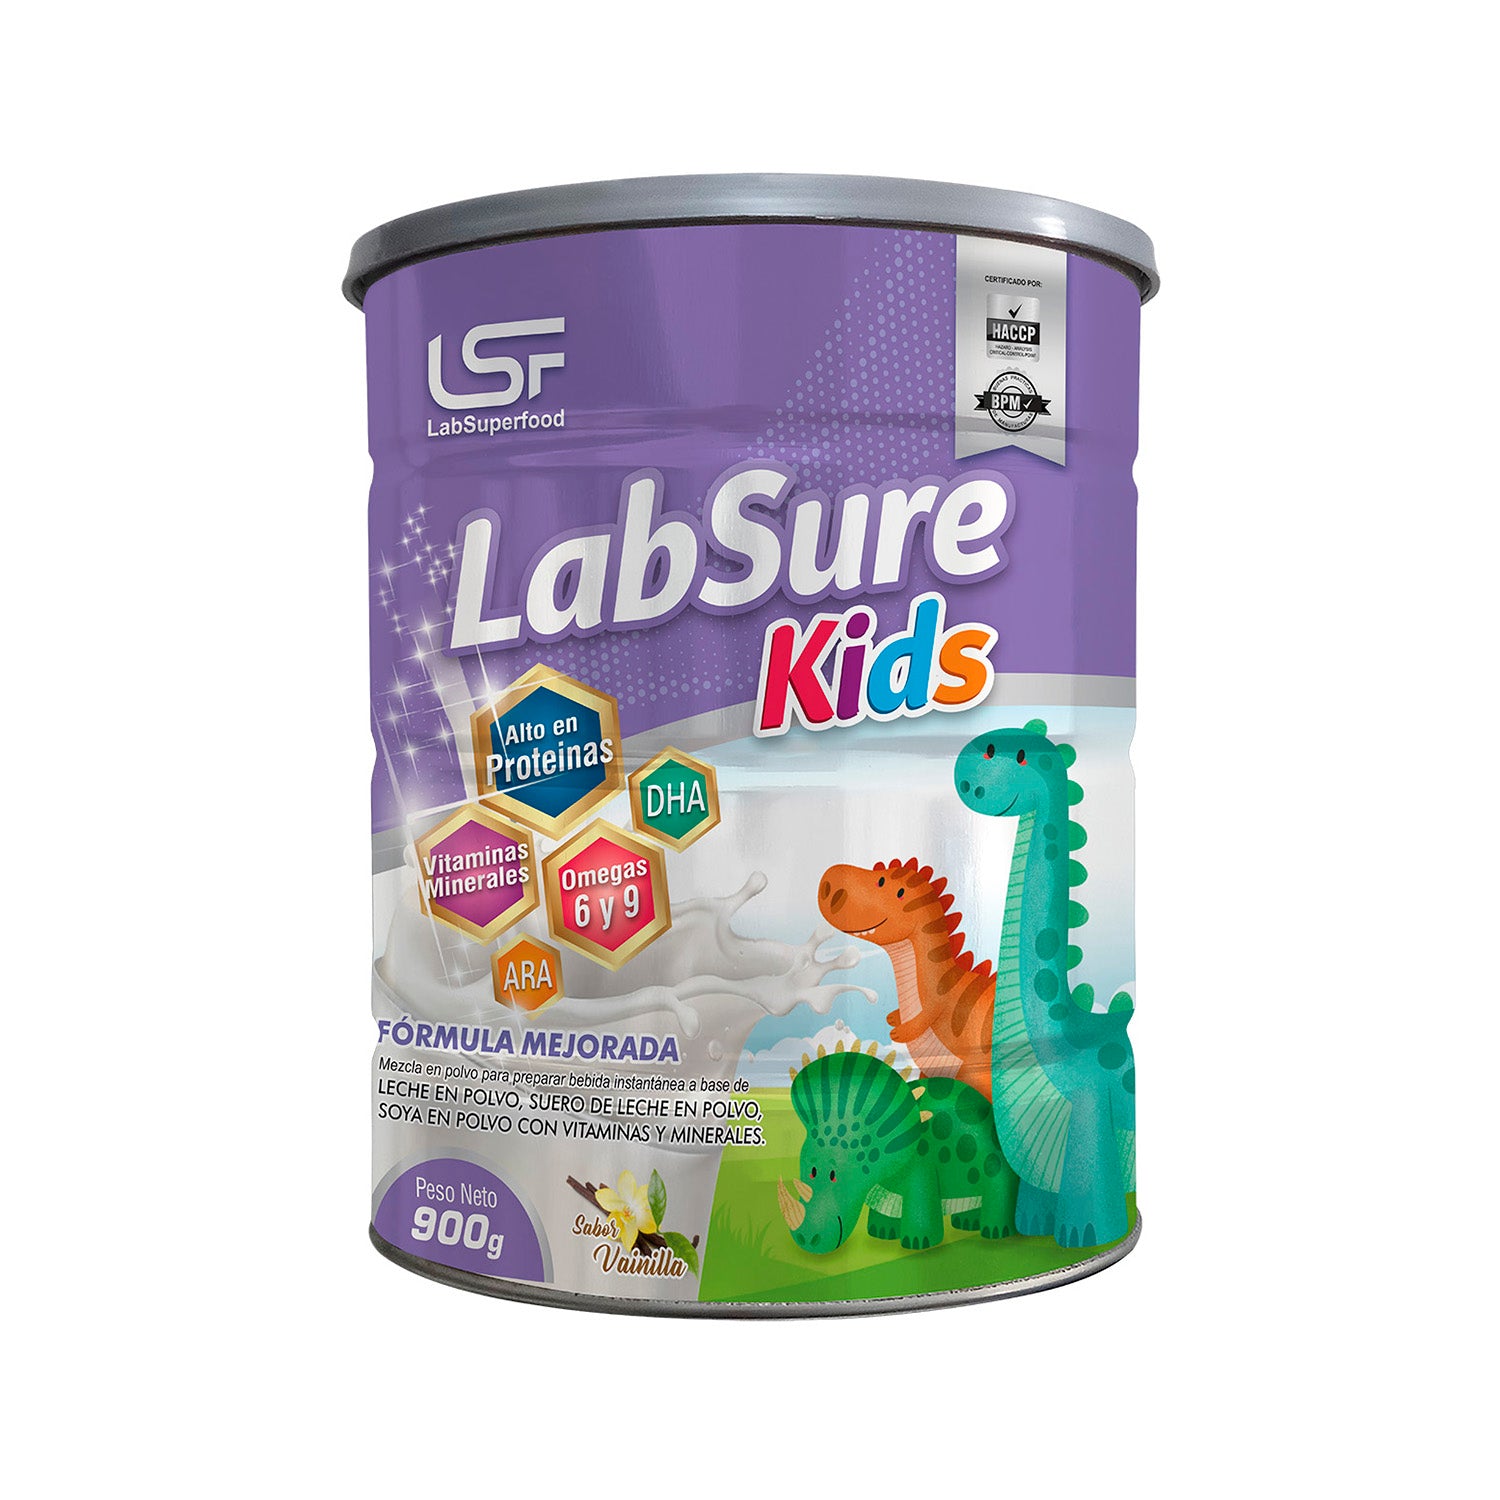 Labsure Kids - Lata - 900g